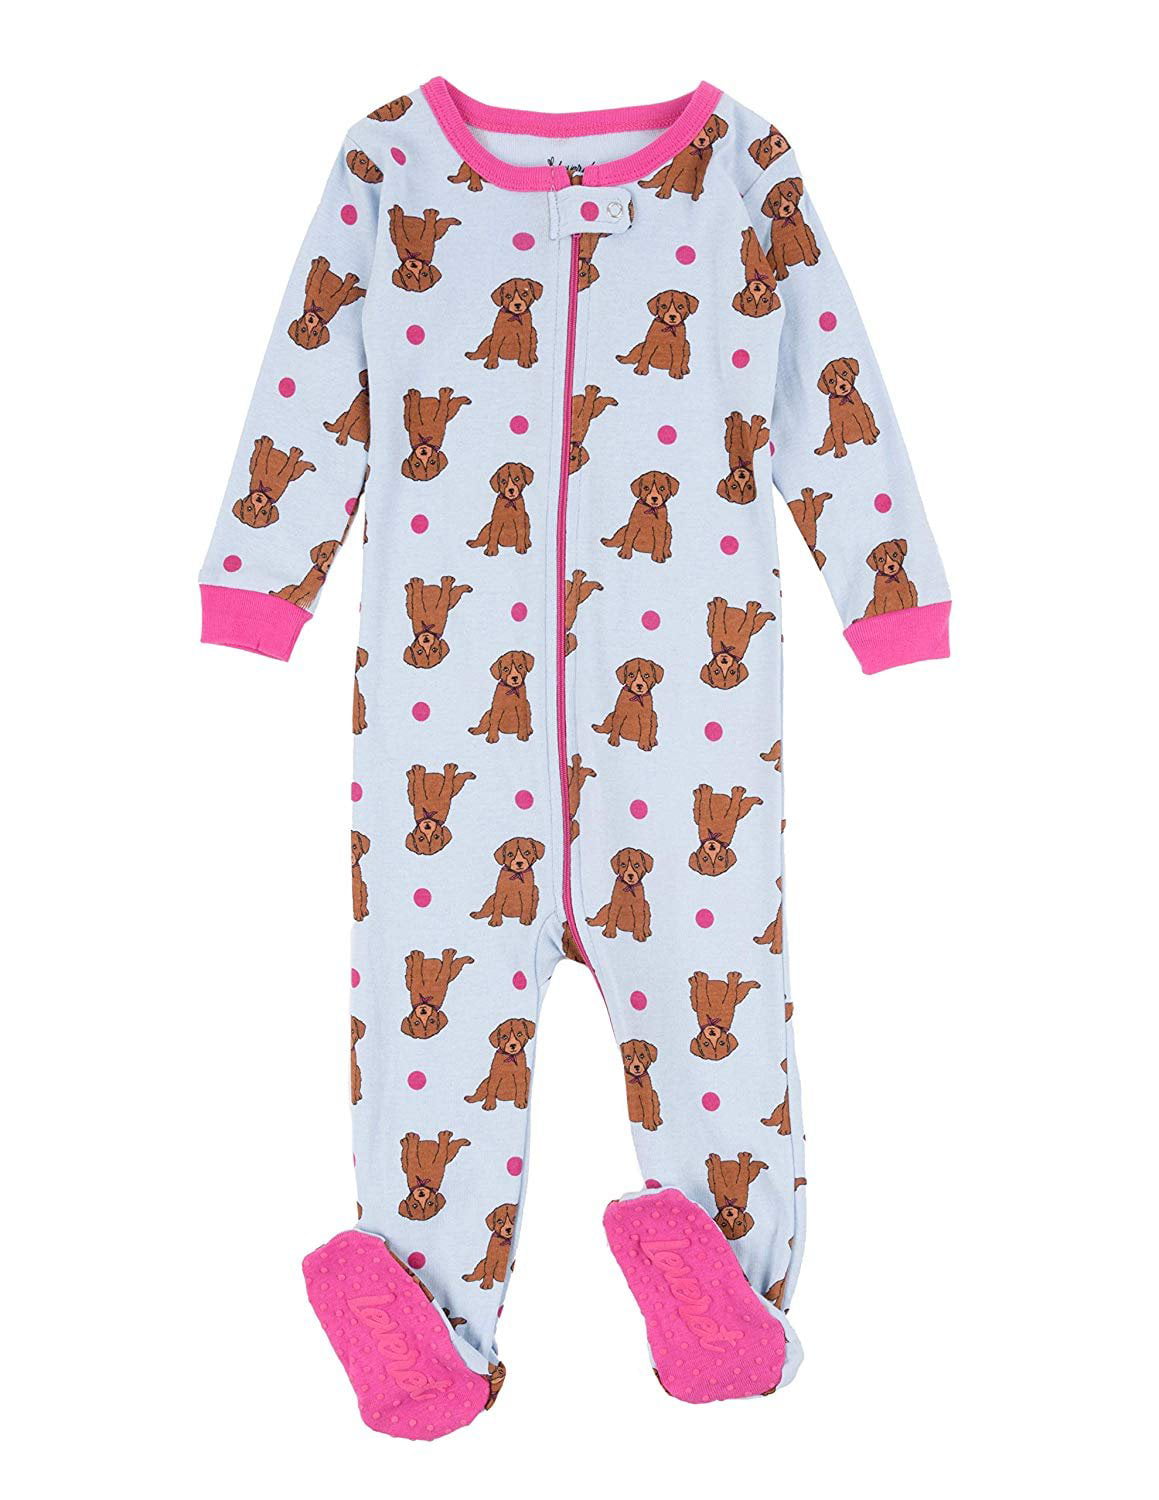 Details about   Nickelodeon Kids Boy's Girl's Paw Patrol Pyjama Set Sleepsuit 100% Cotton 3-6Yrs 